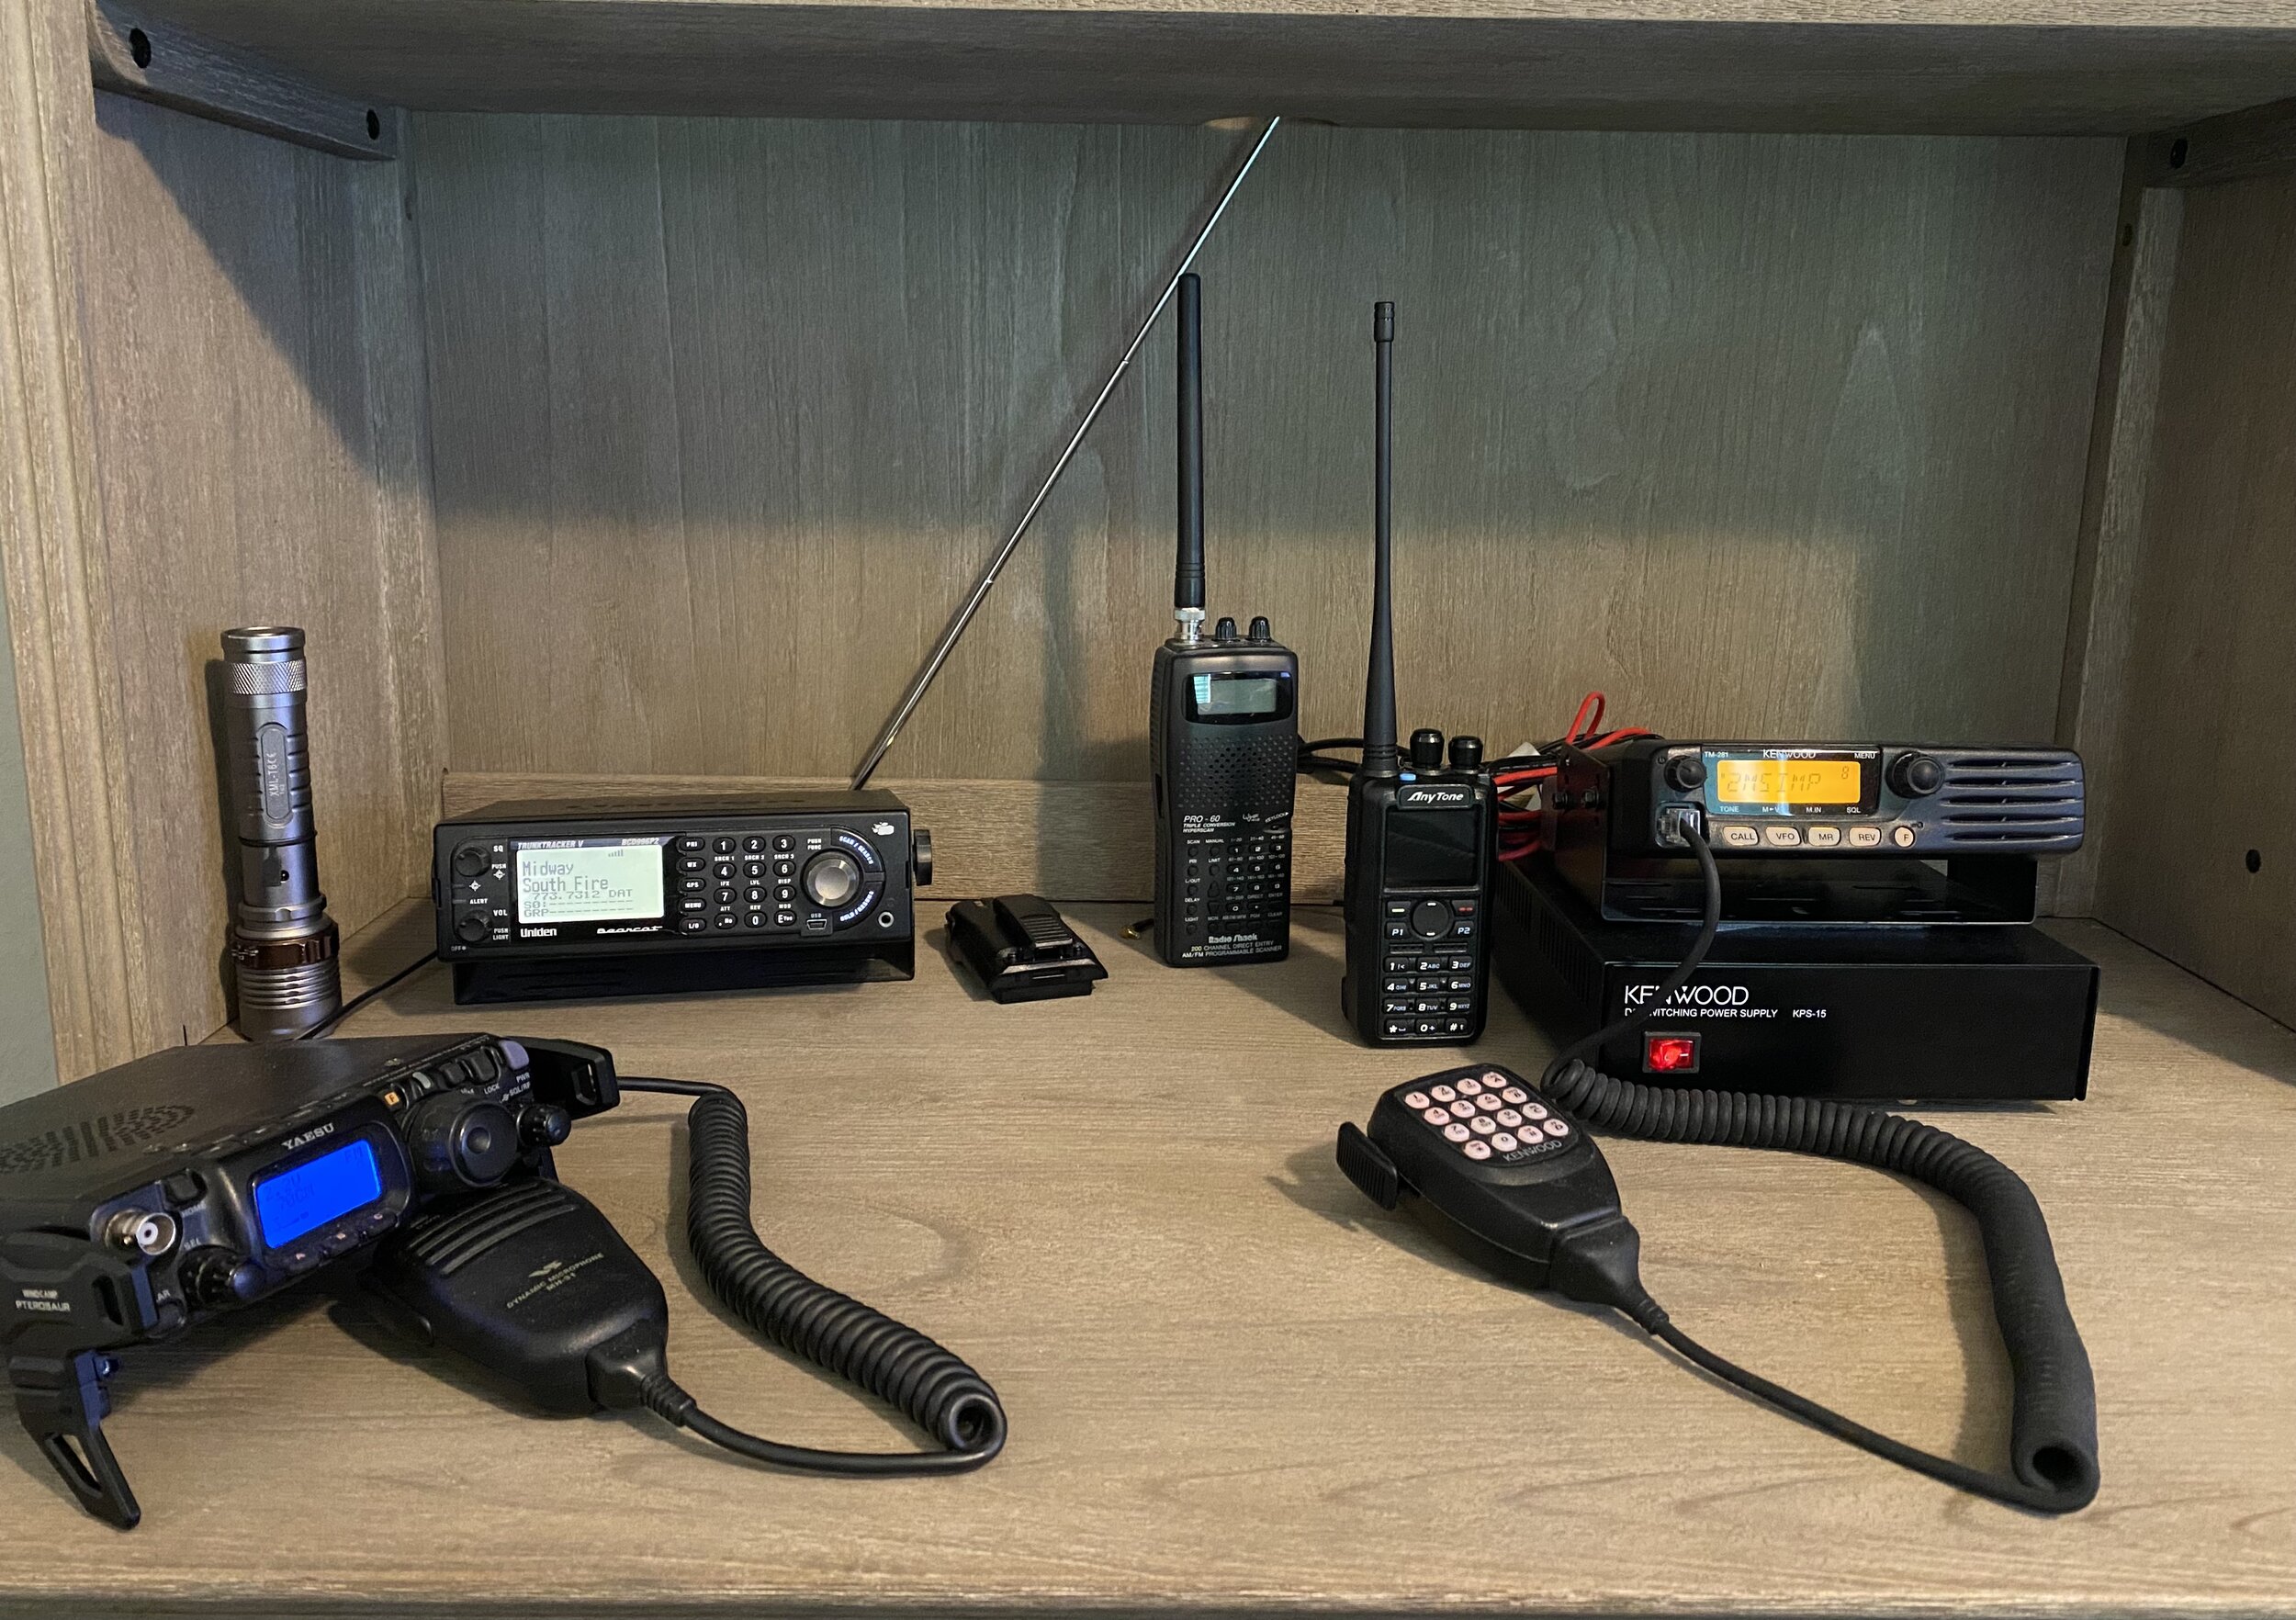 Some of Scottie’s HAM radio gear